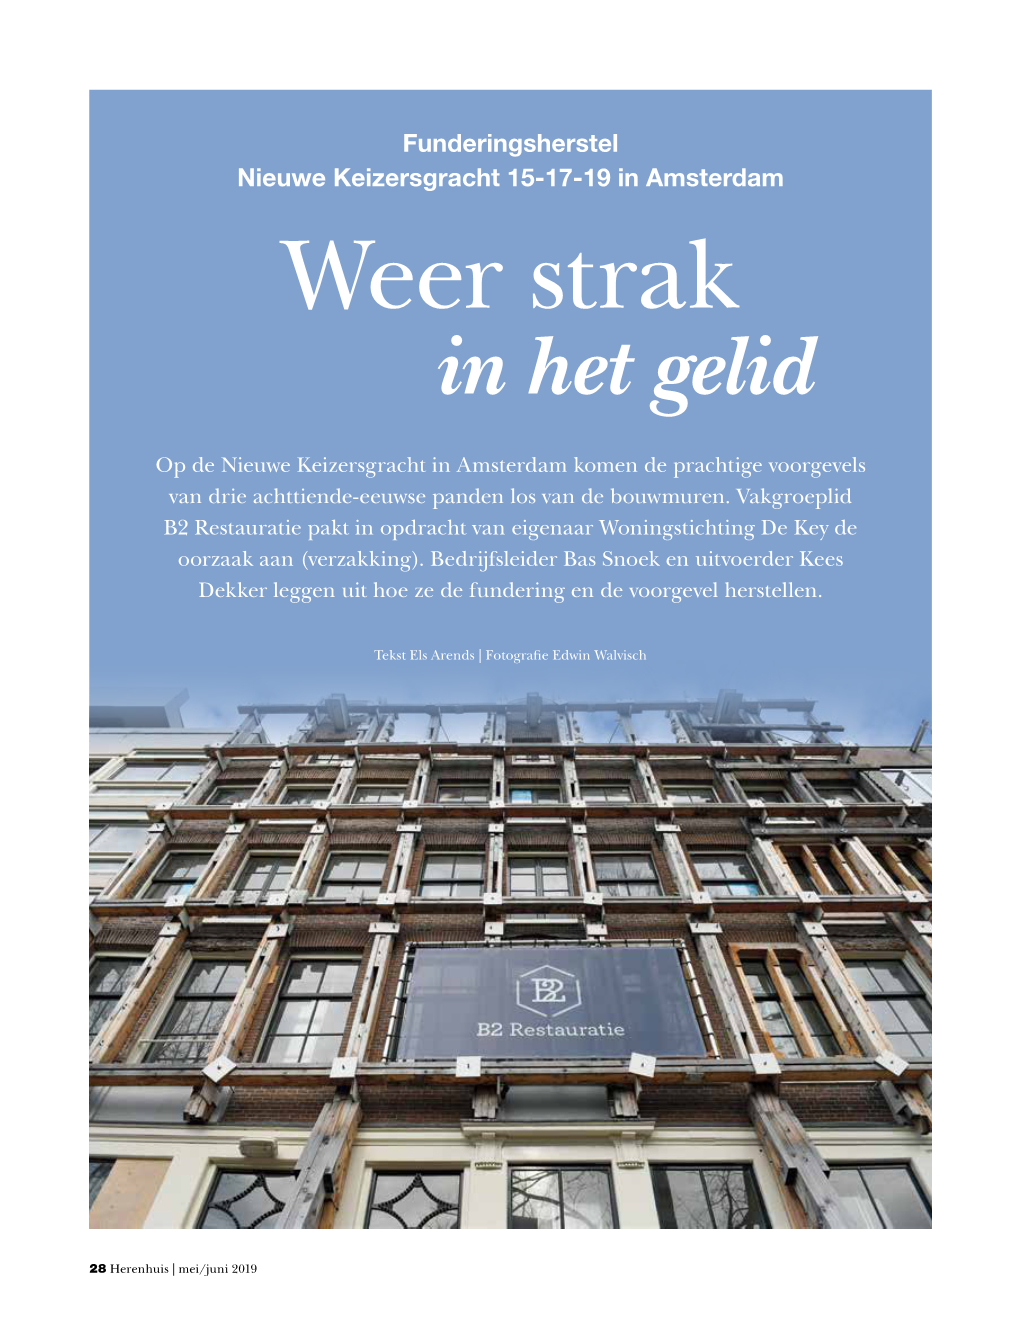 Artikel in Herenhuis Over Funderingsherstel Nieuwe